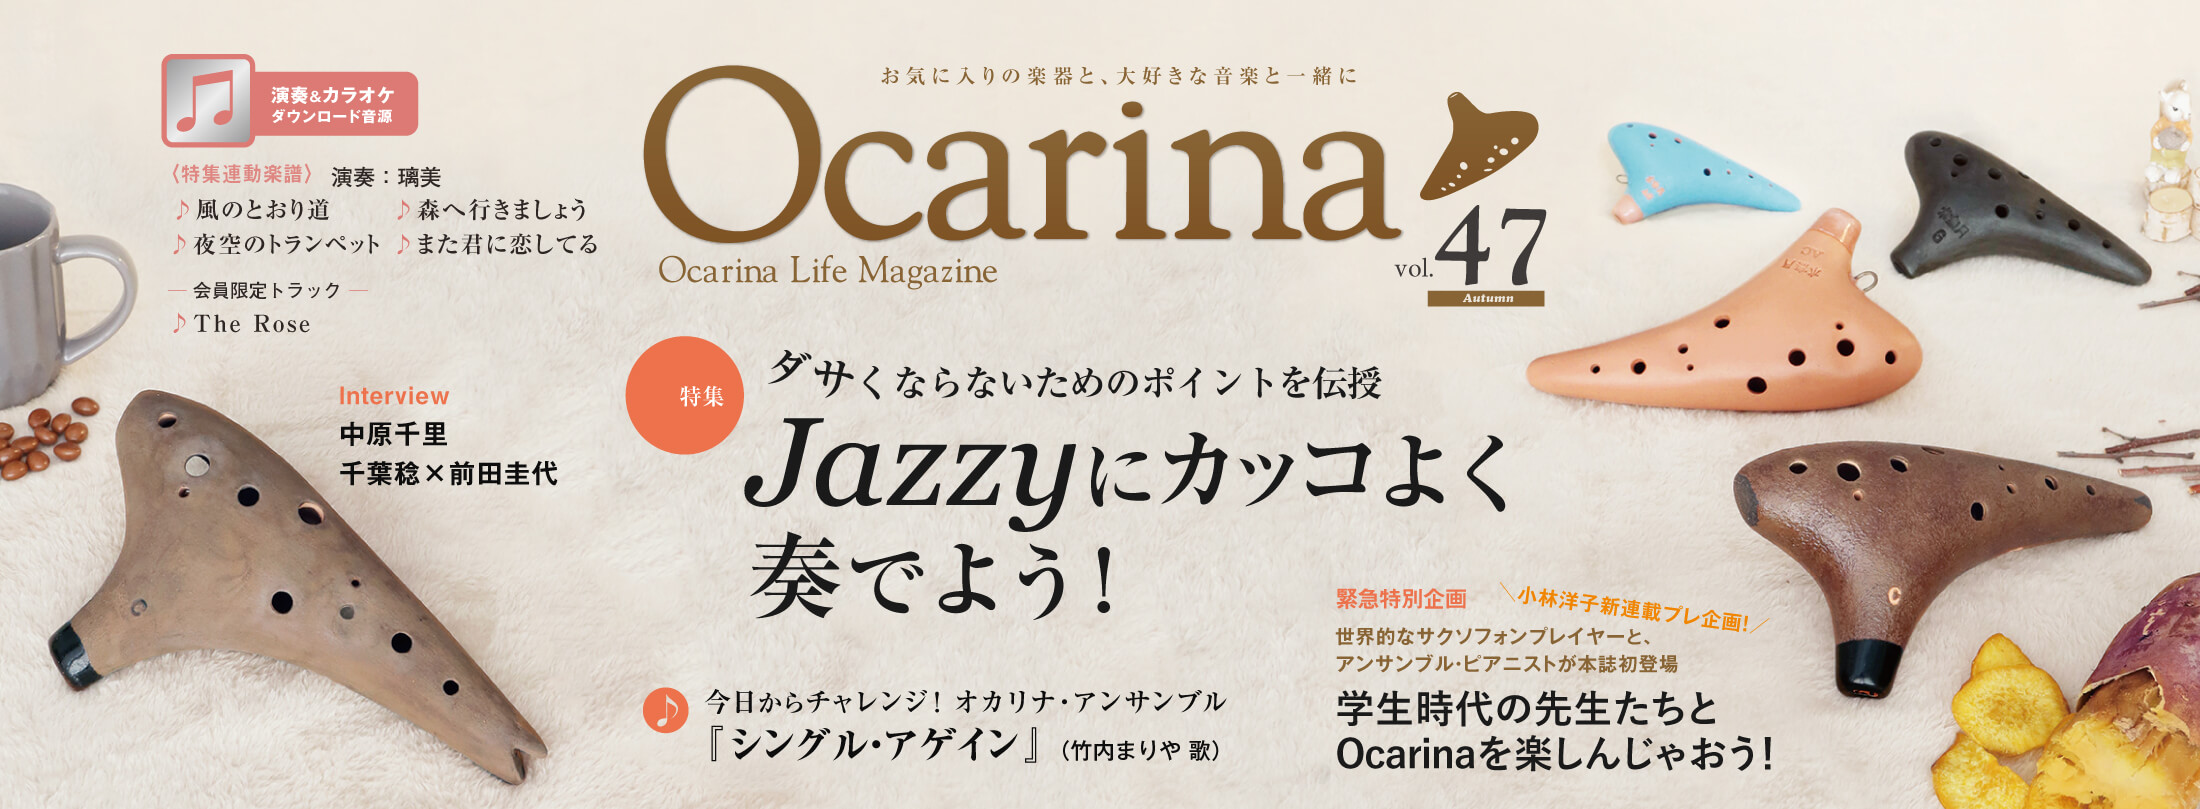 Ocarina 47号